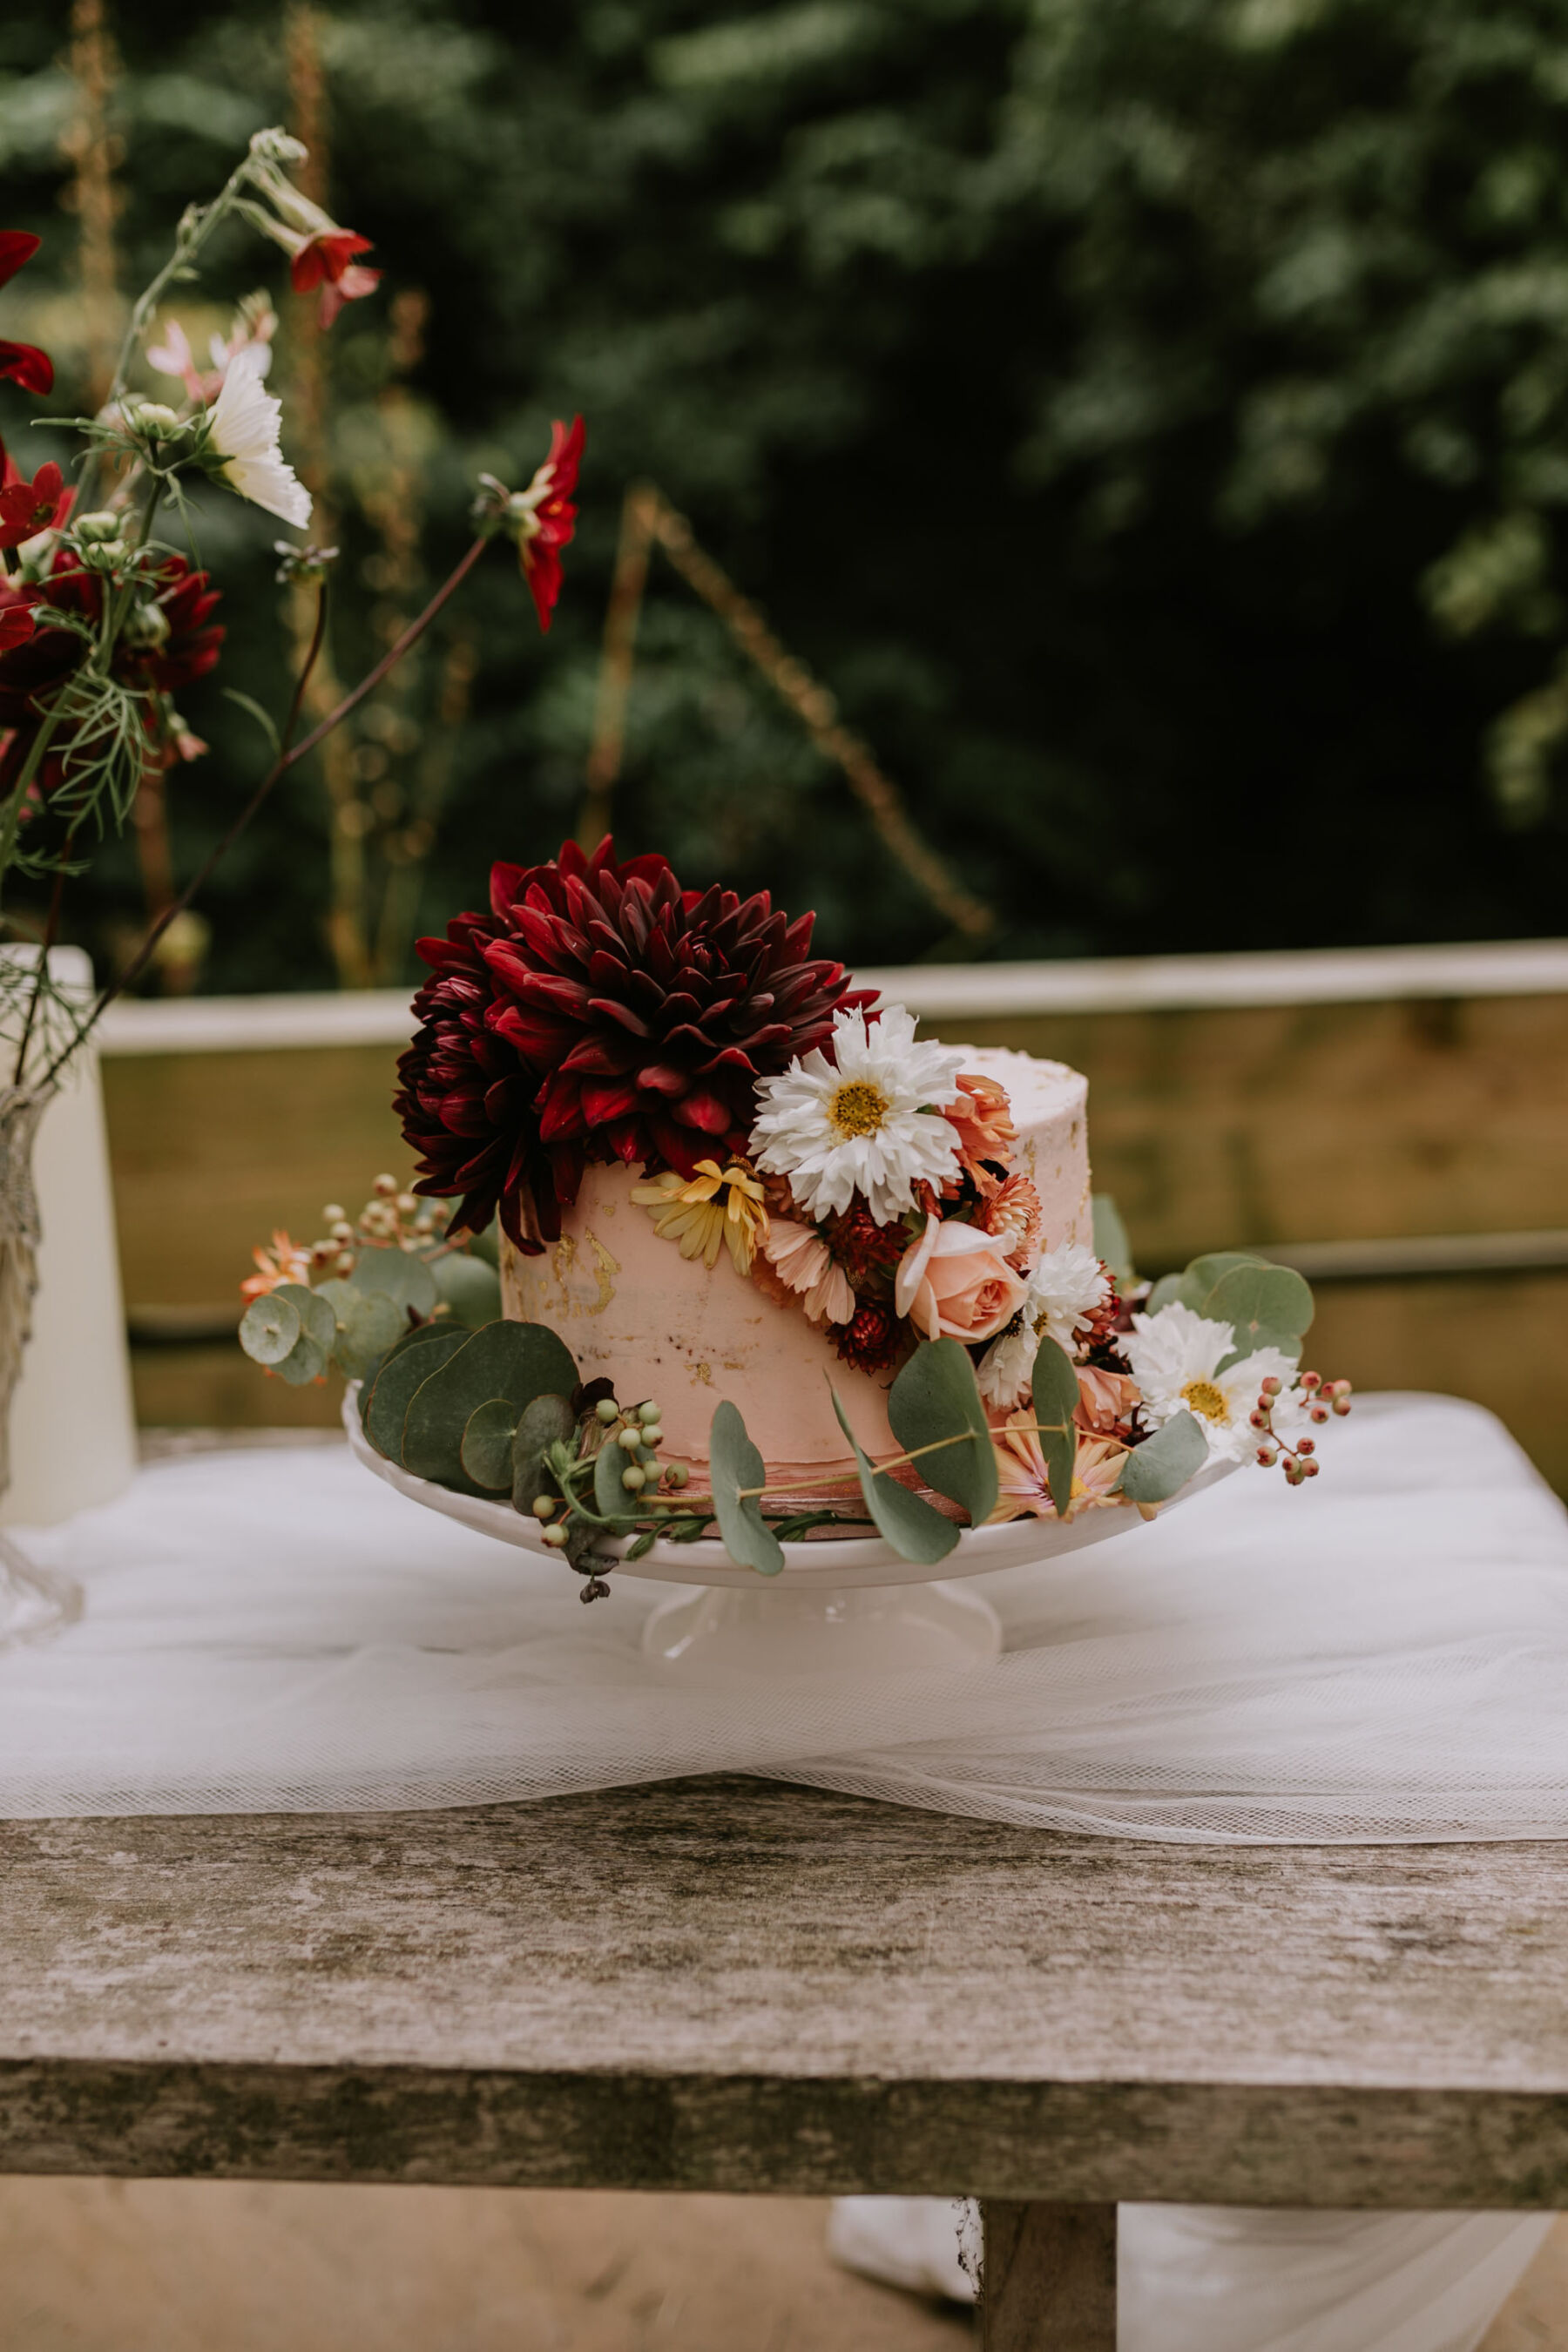 Single Tier wedding cake with fresh flowers